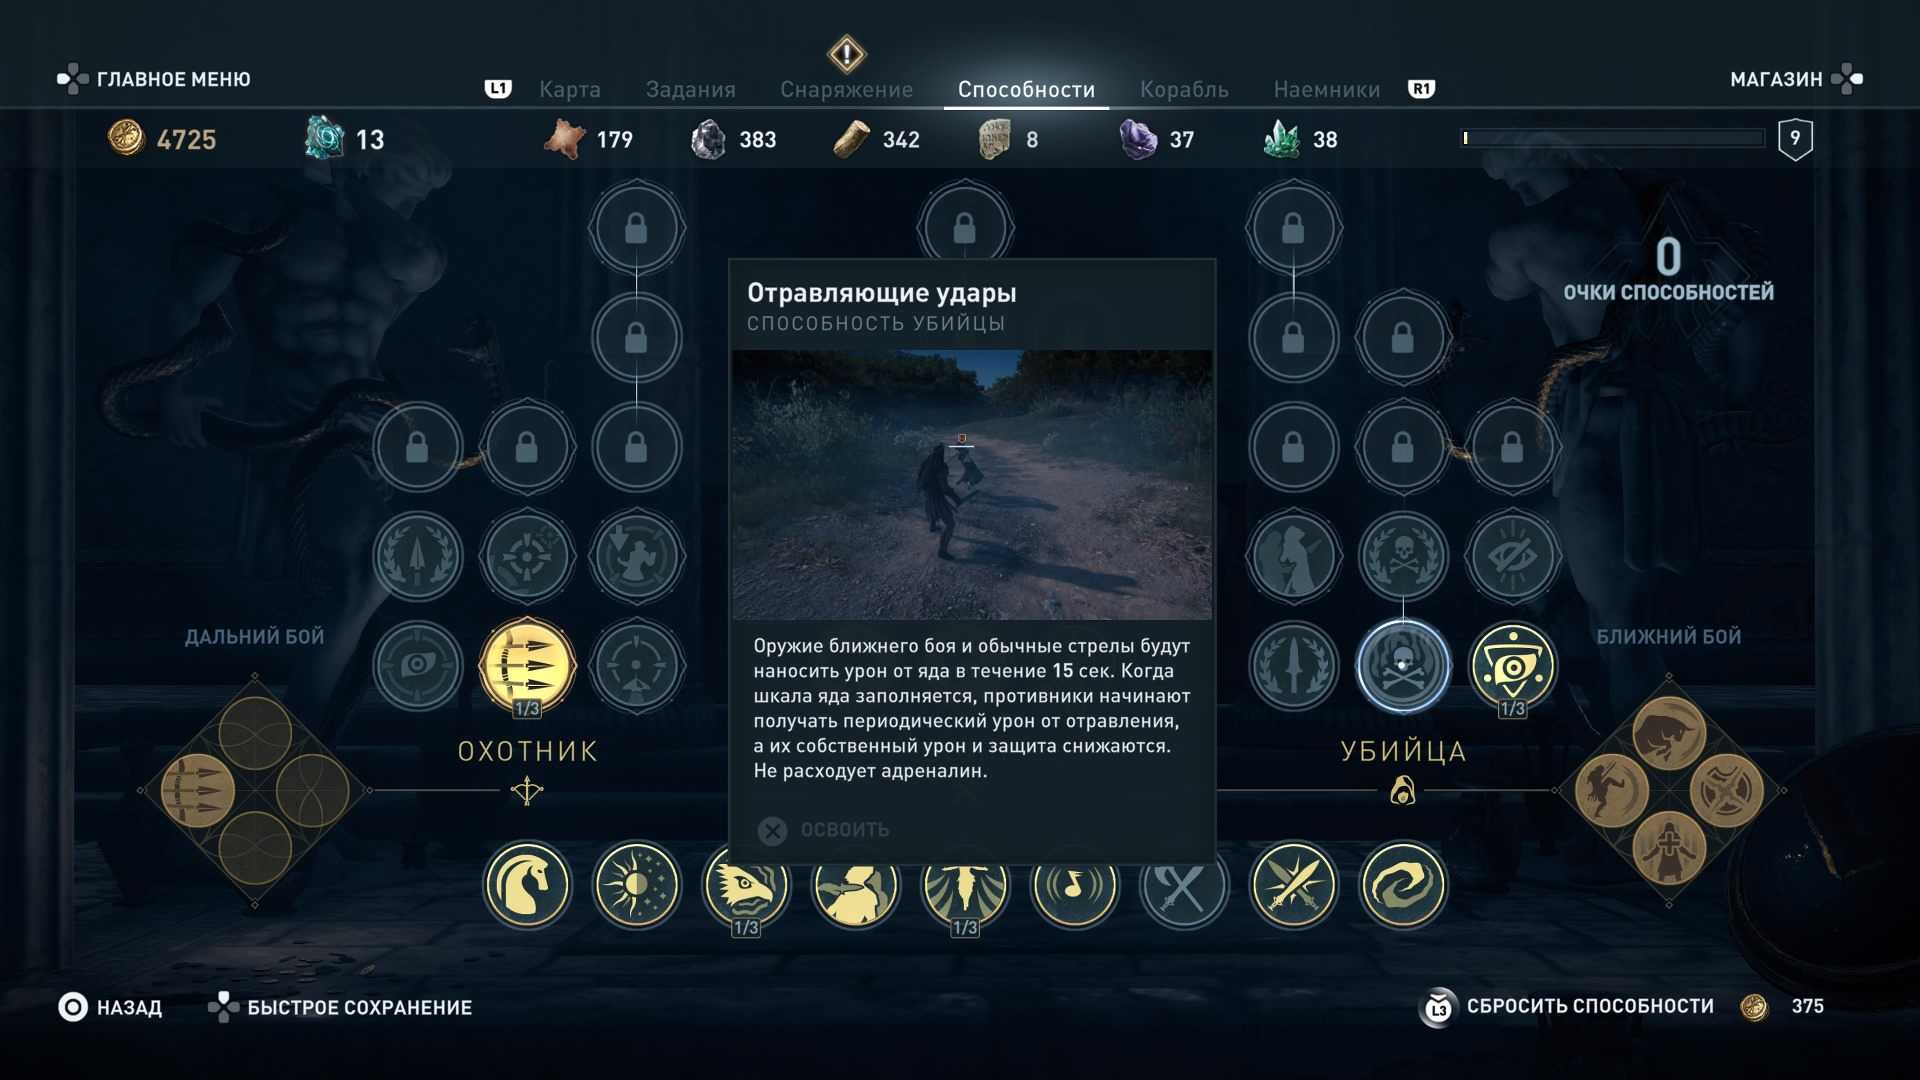 Assassin’s creed odyssey - где найти все комплекты легендарной брони - guidesgame